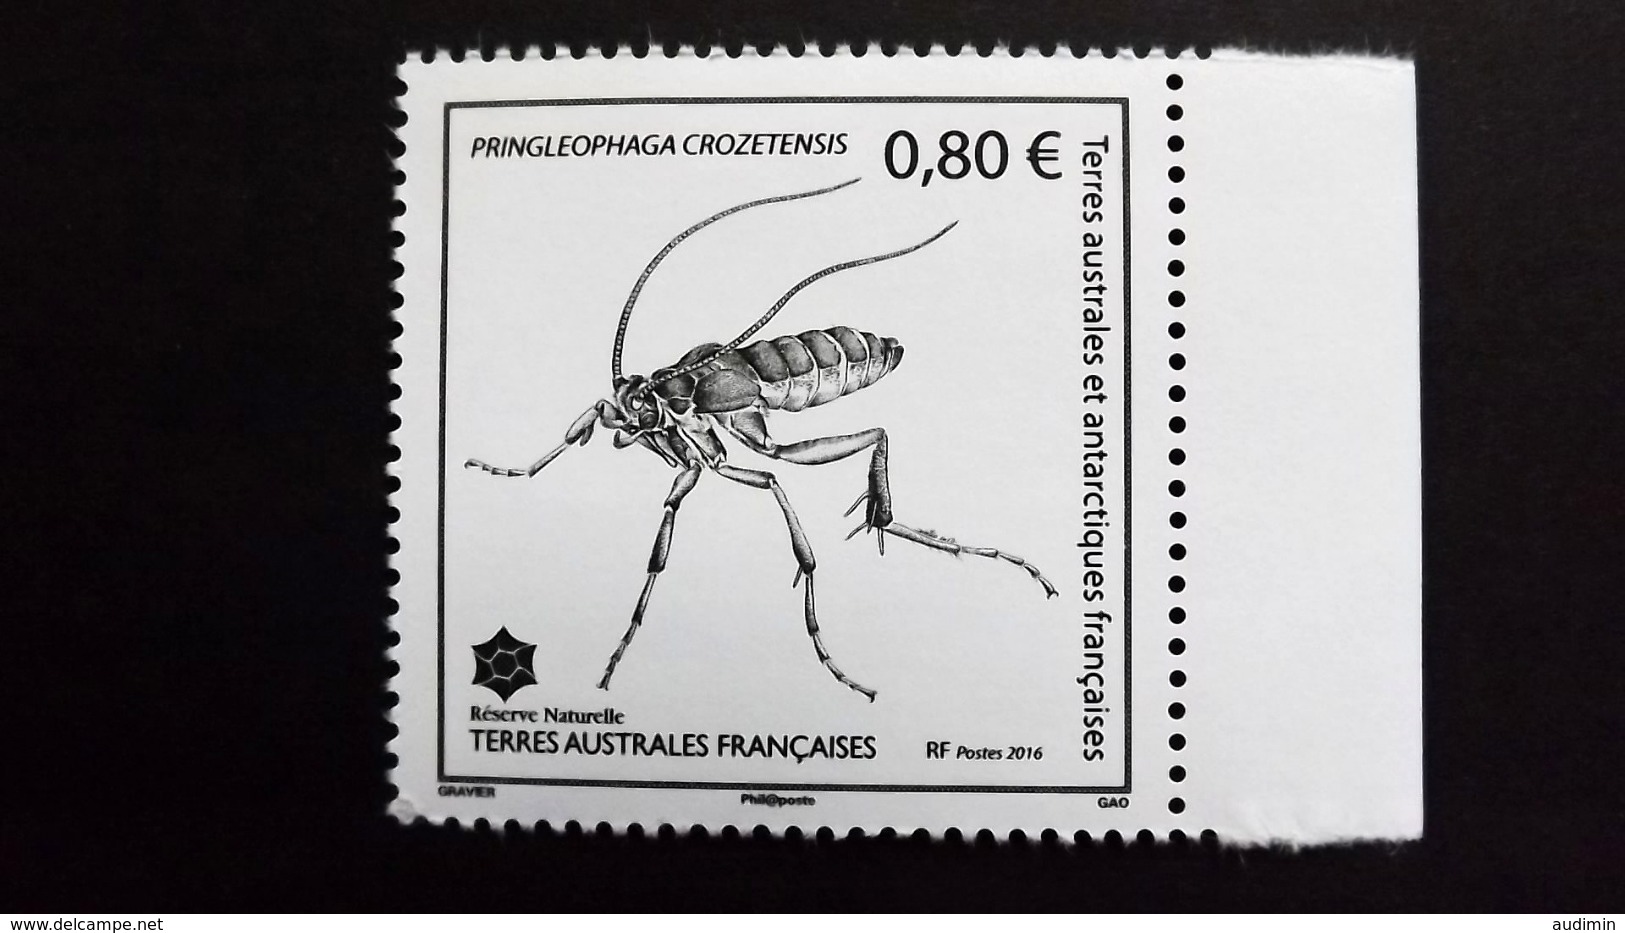 Französische Süd- Und Antarktisgebiete TAAF 914 **/mnh, Pringleophaga Crozetensis (endemische Schmetterlingsart) Crozet - Ongebruikt